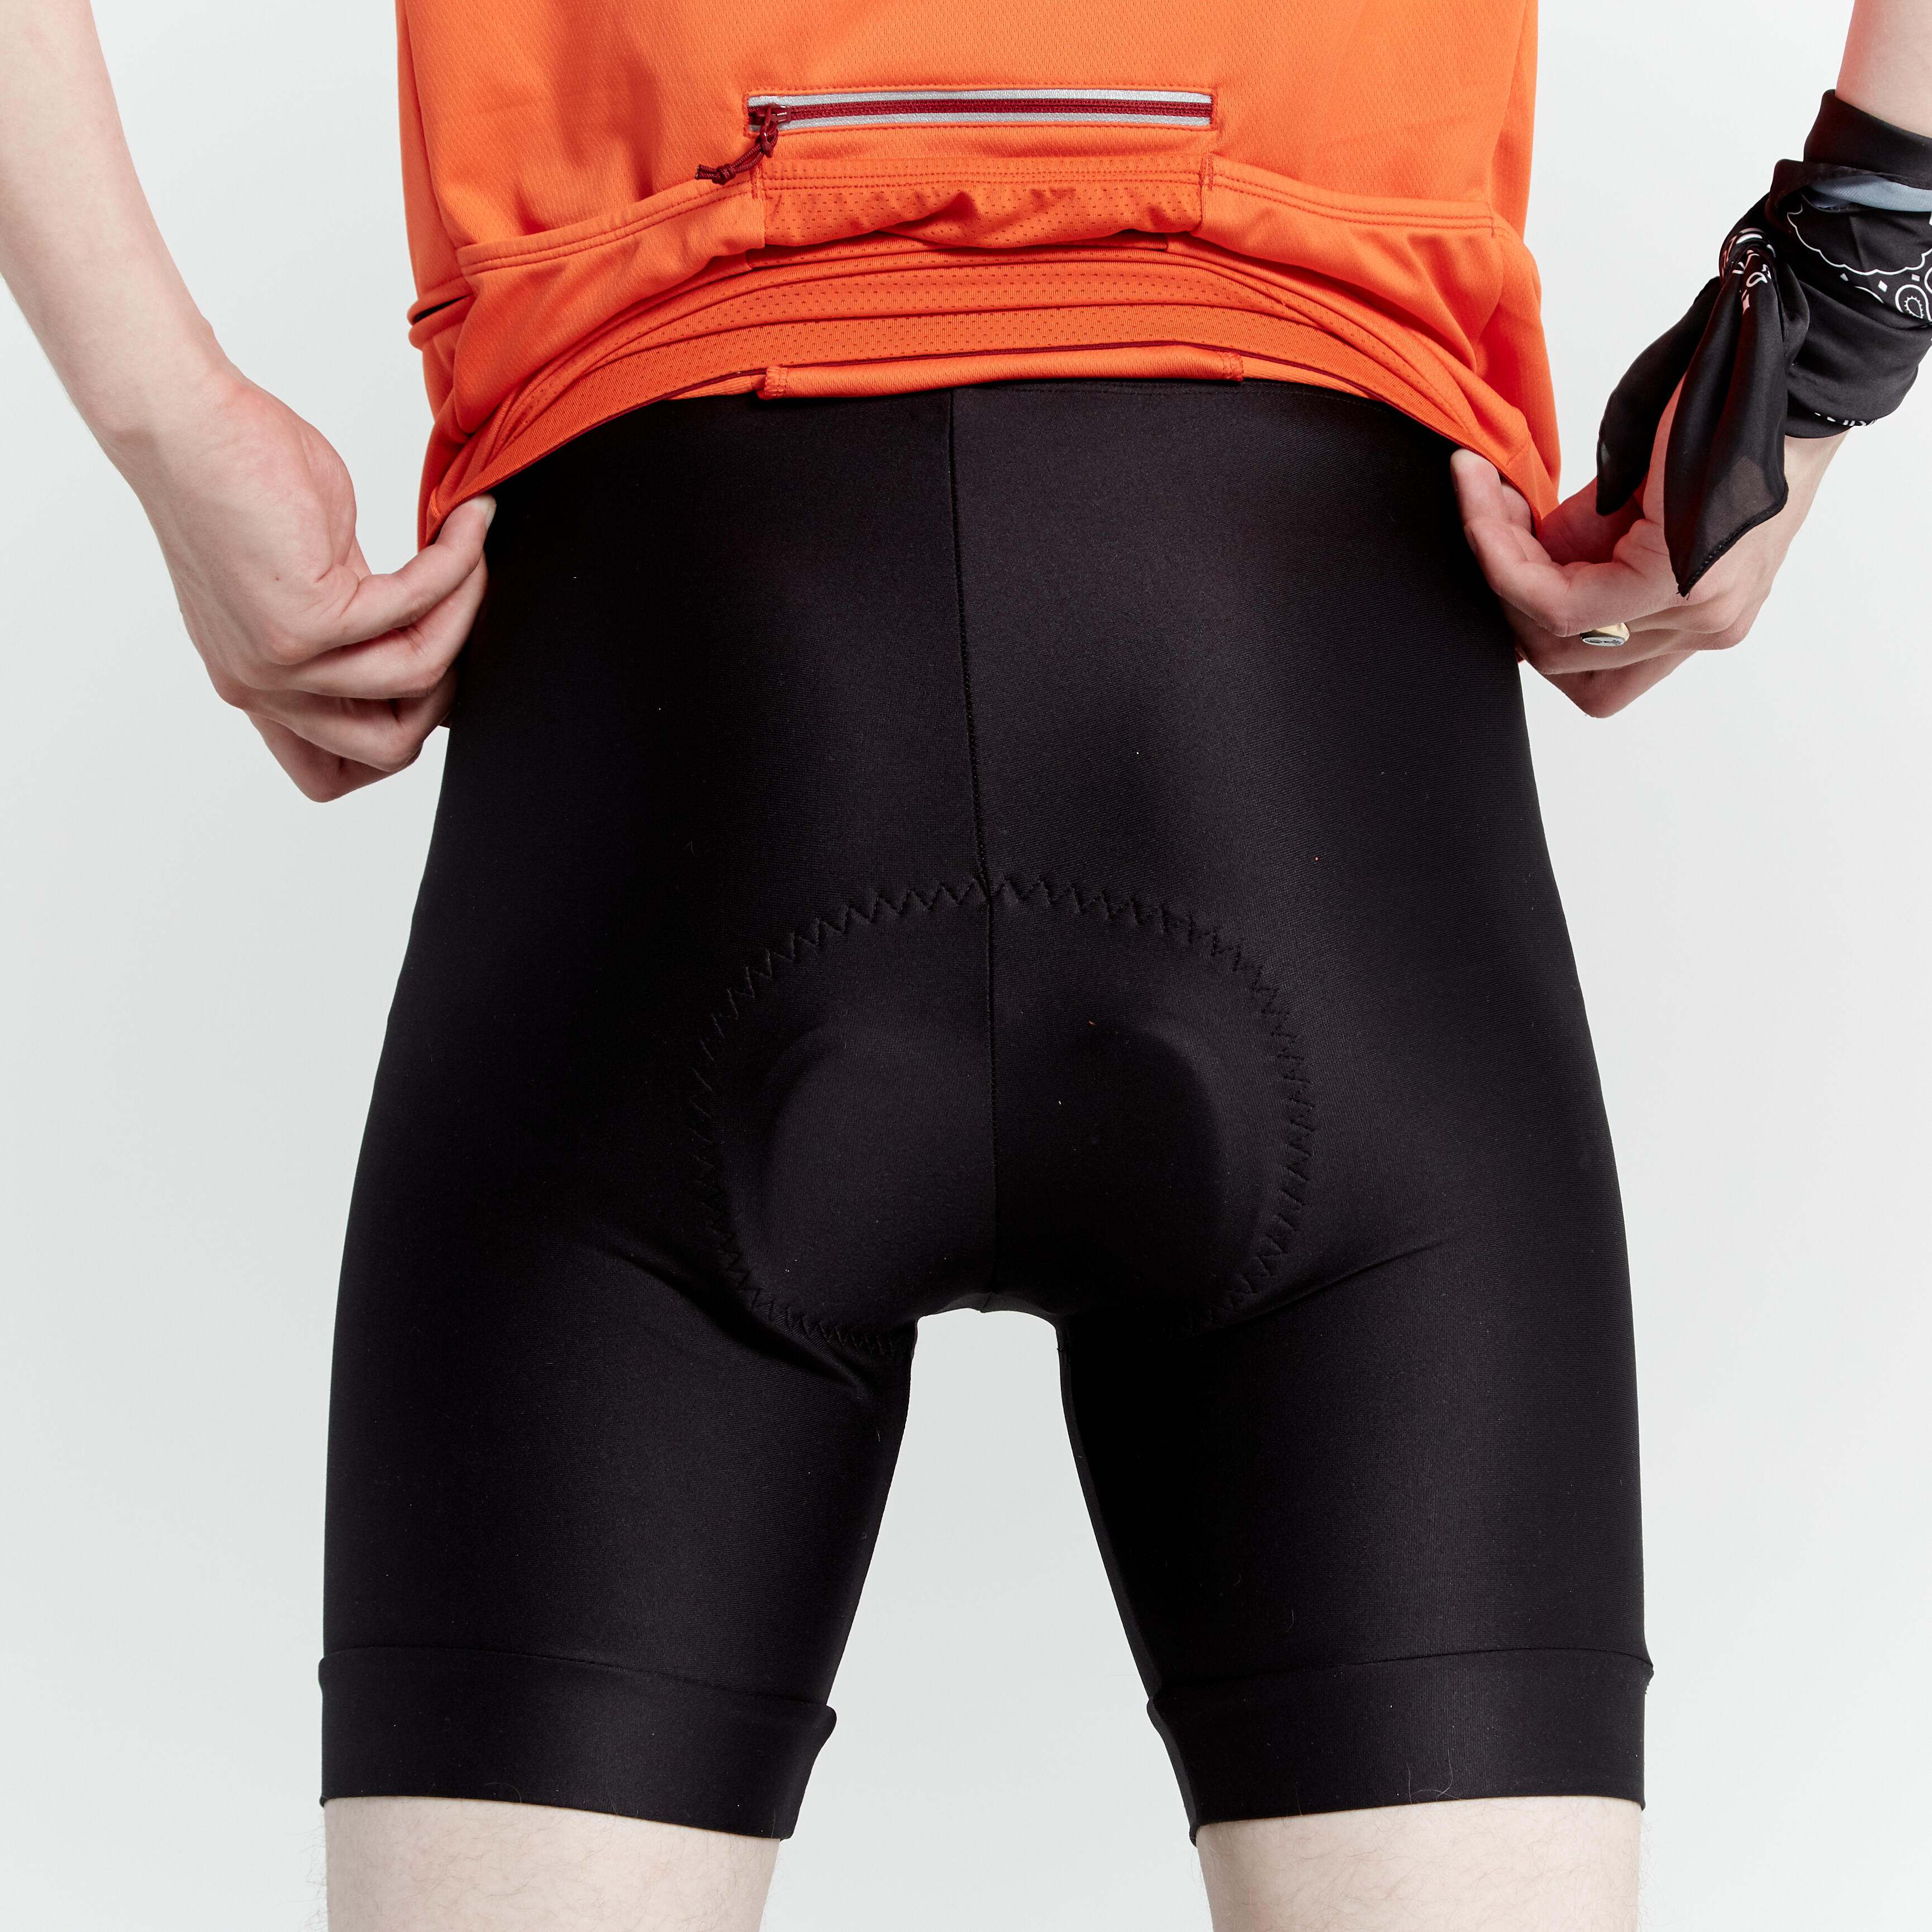 Men's Biking Shorts - Essential Black - Black - Triban - Decathlon